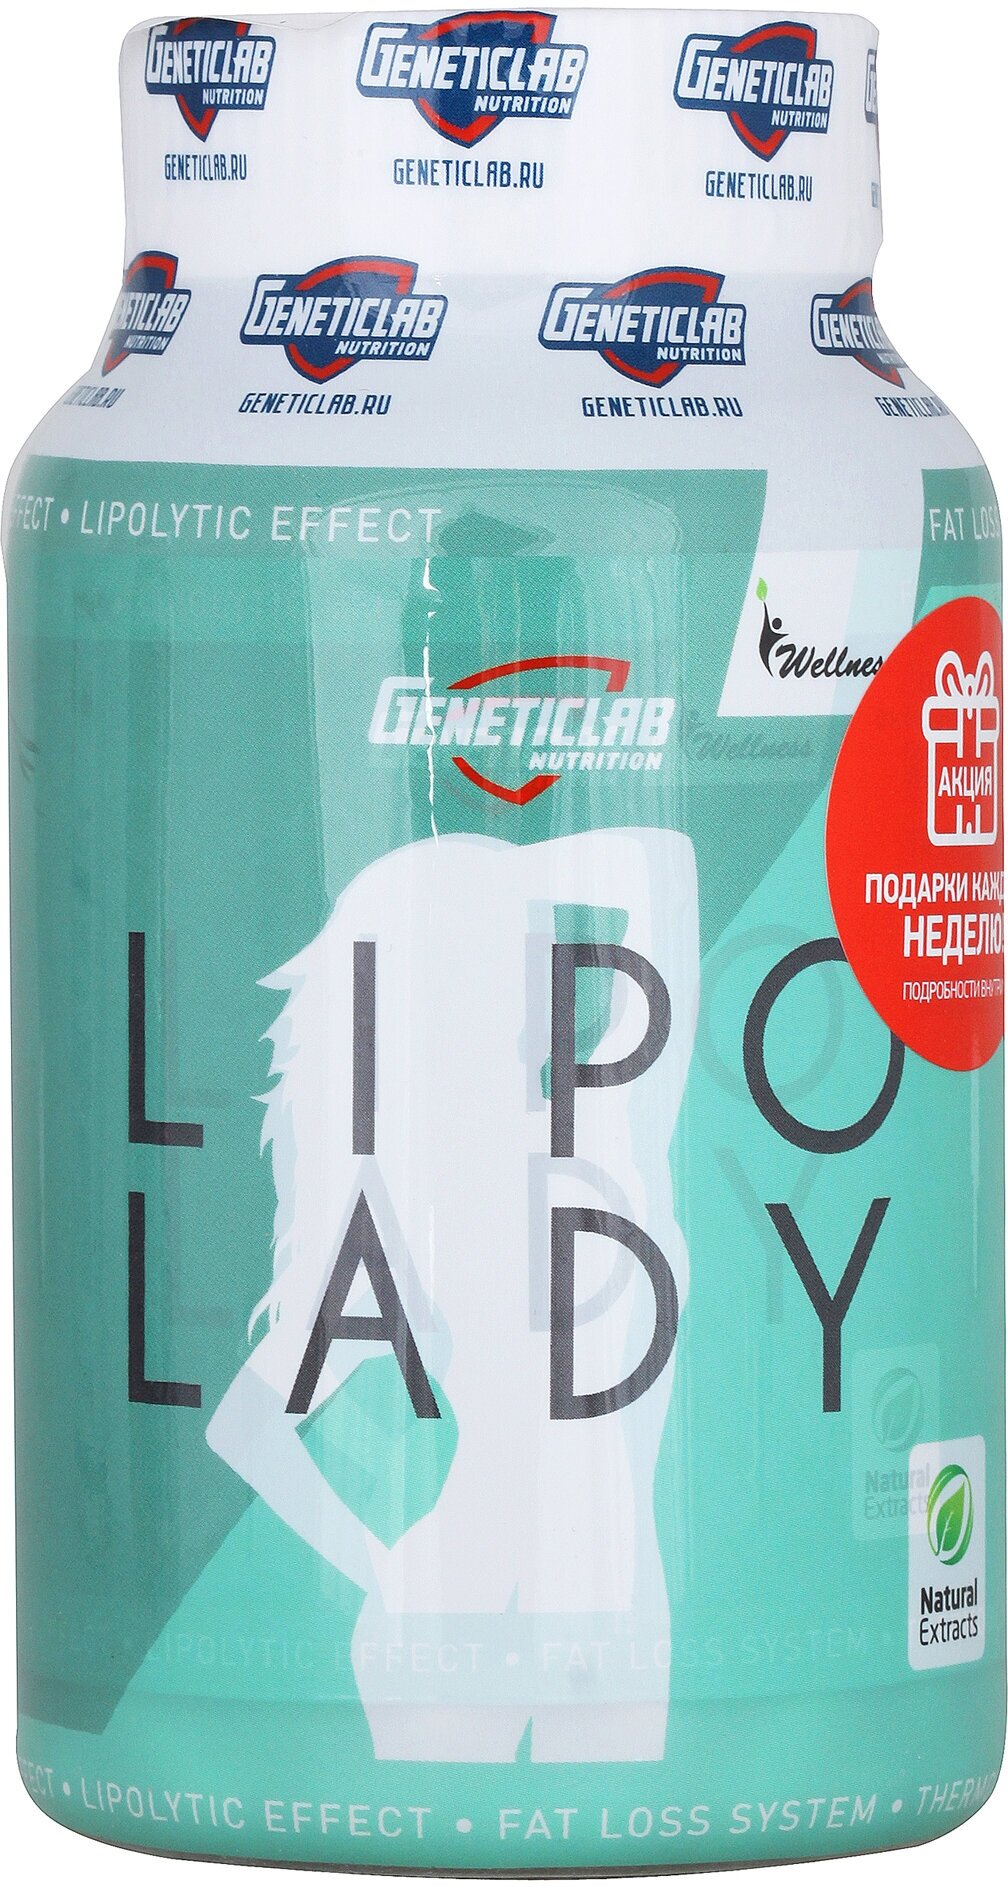 GeneticLab Lipo Lady 120 капсул